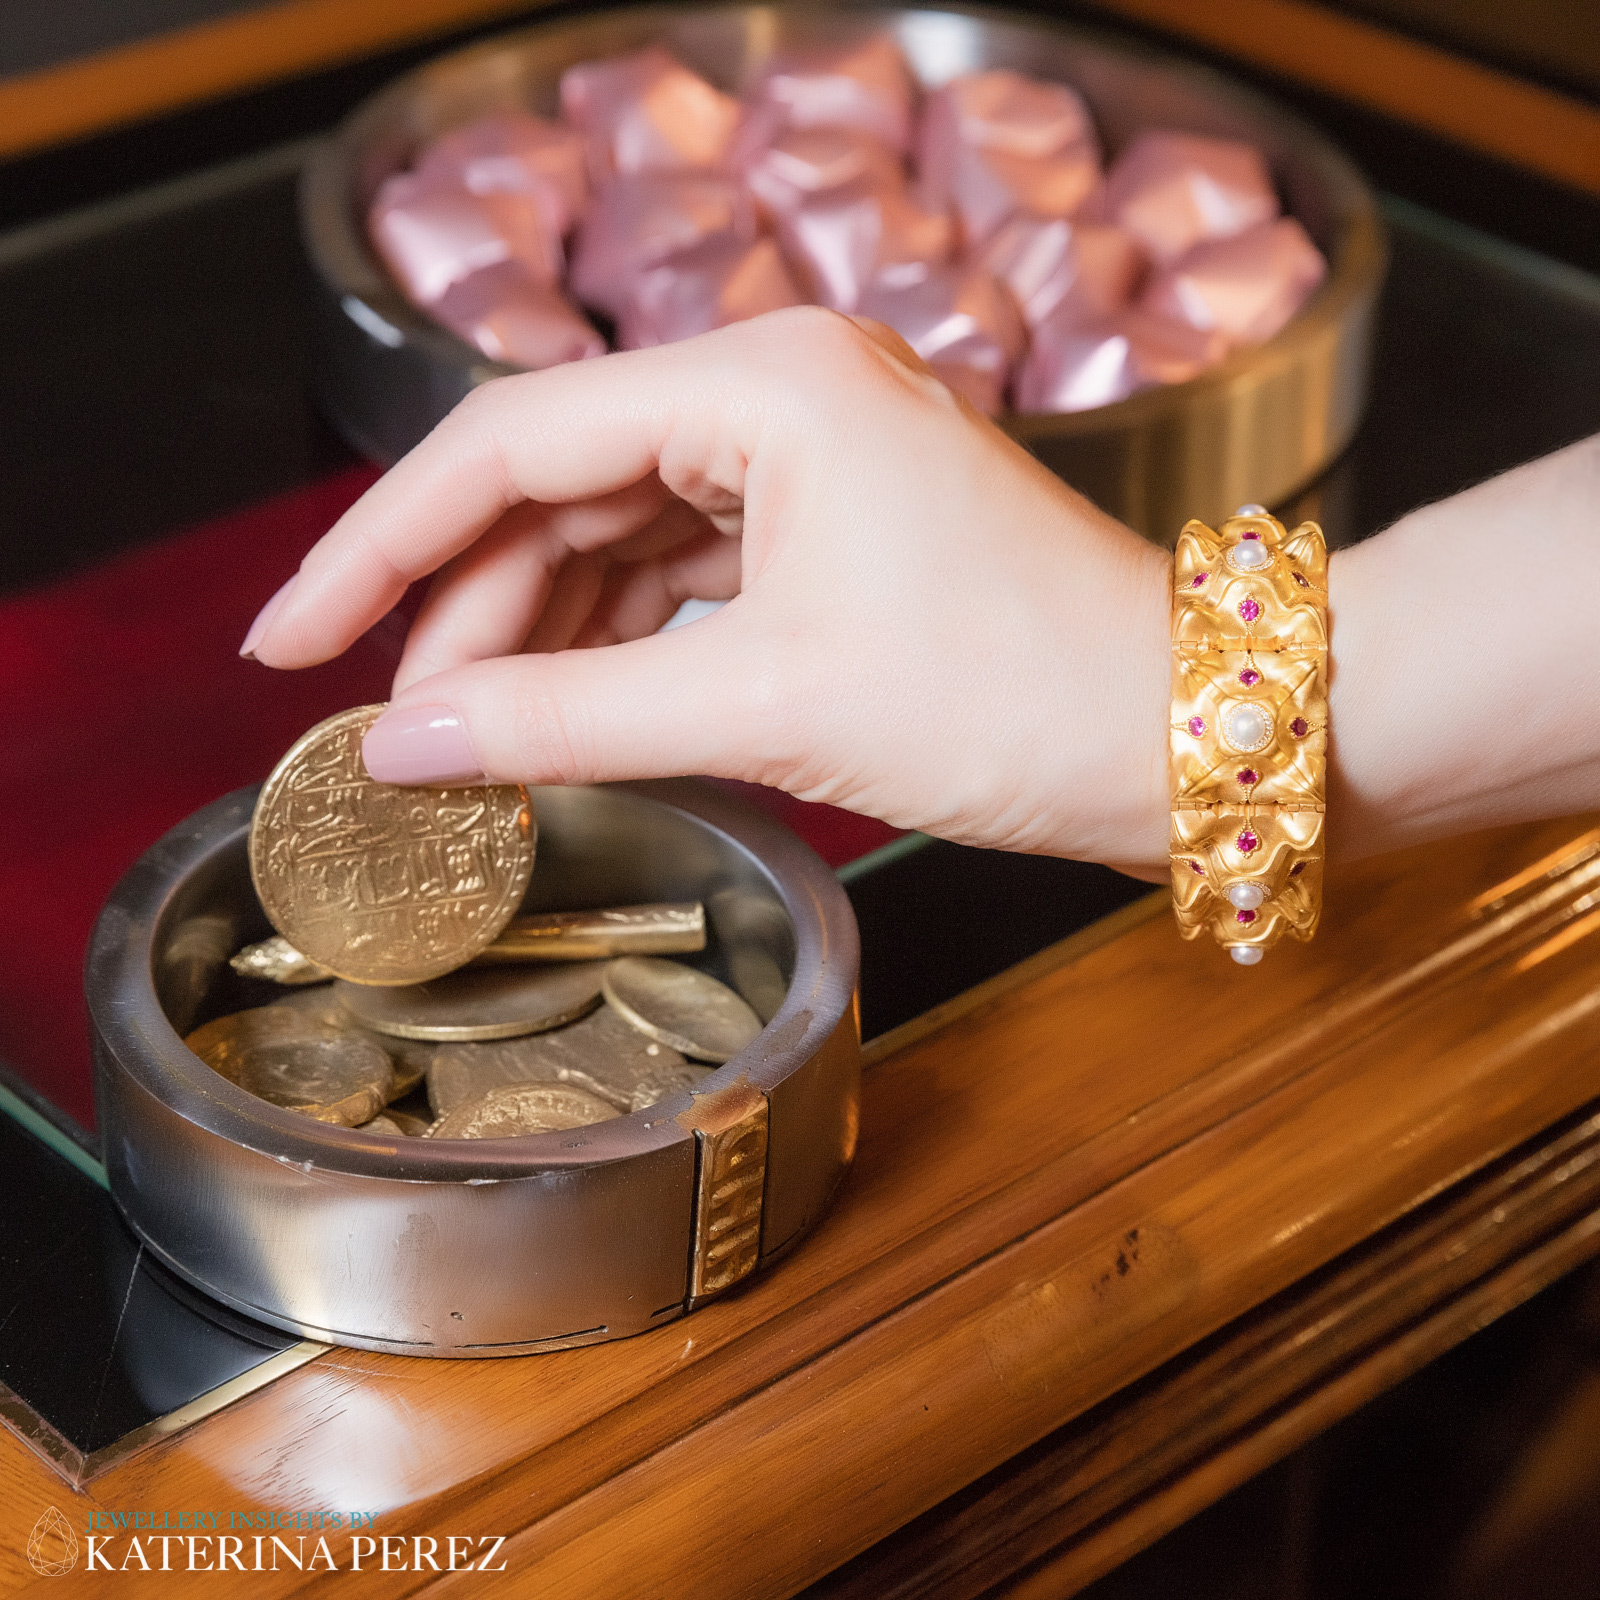 Браслет Henry Dakak L'age d'Or из 21K золота с рубинами, жемчугом и бриллиантами. Фото: Simon Martner.